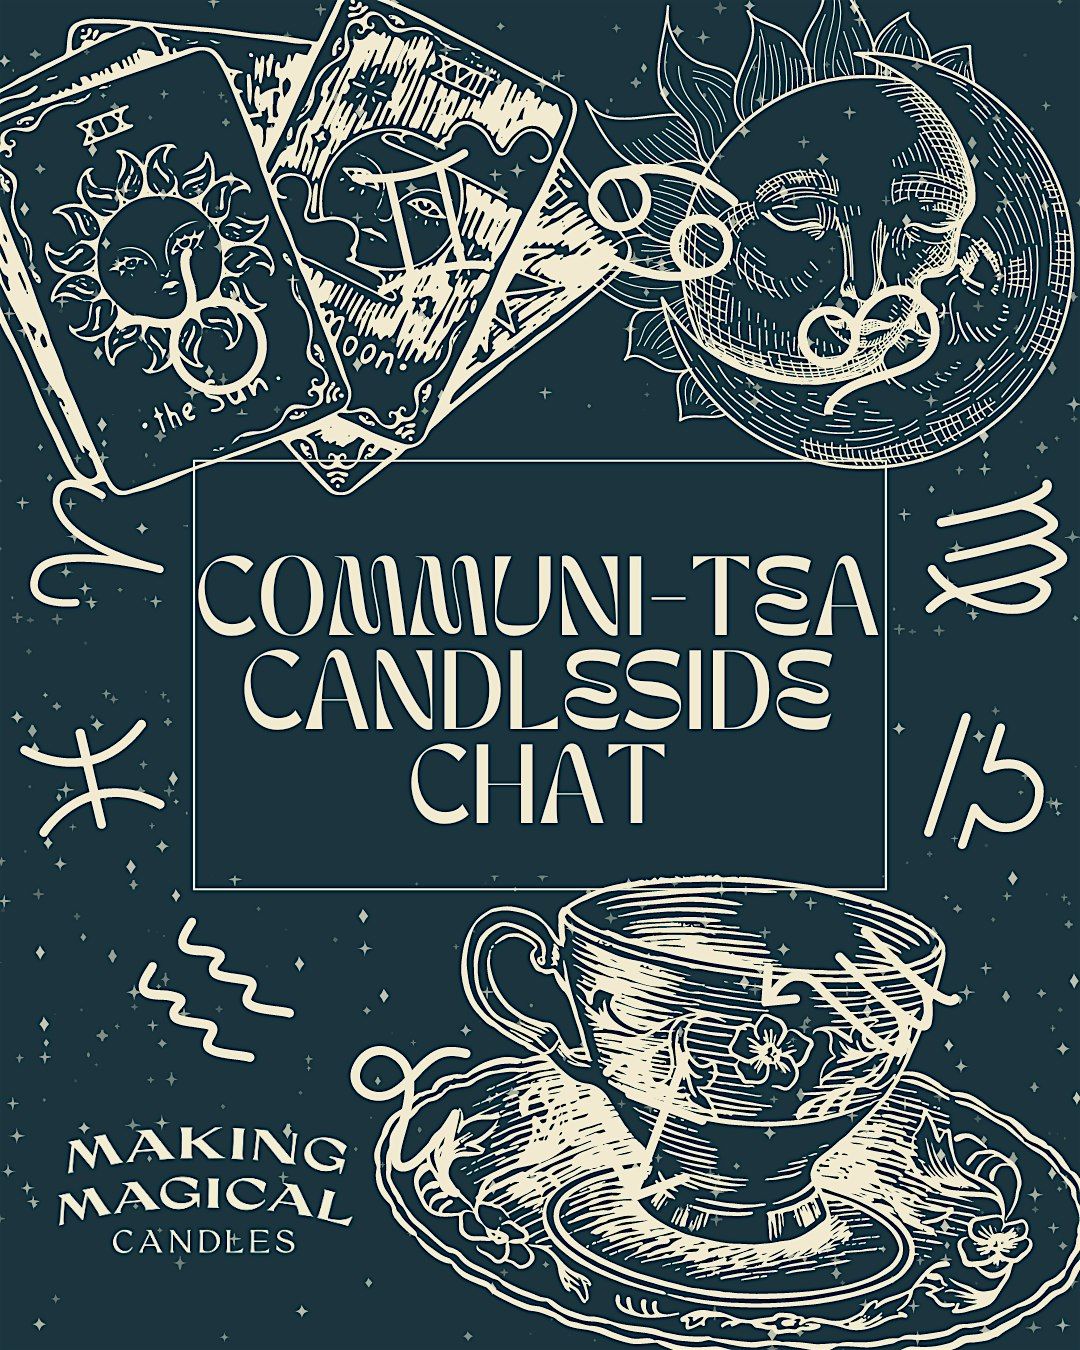 Communi-Tea Candleside Chat: Candlelit Spiritual Gathering for Women